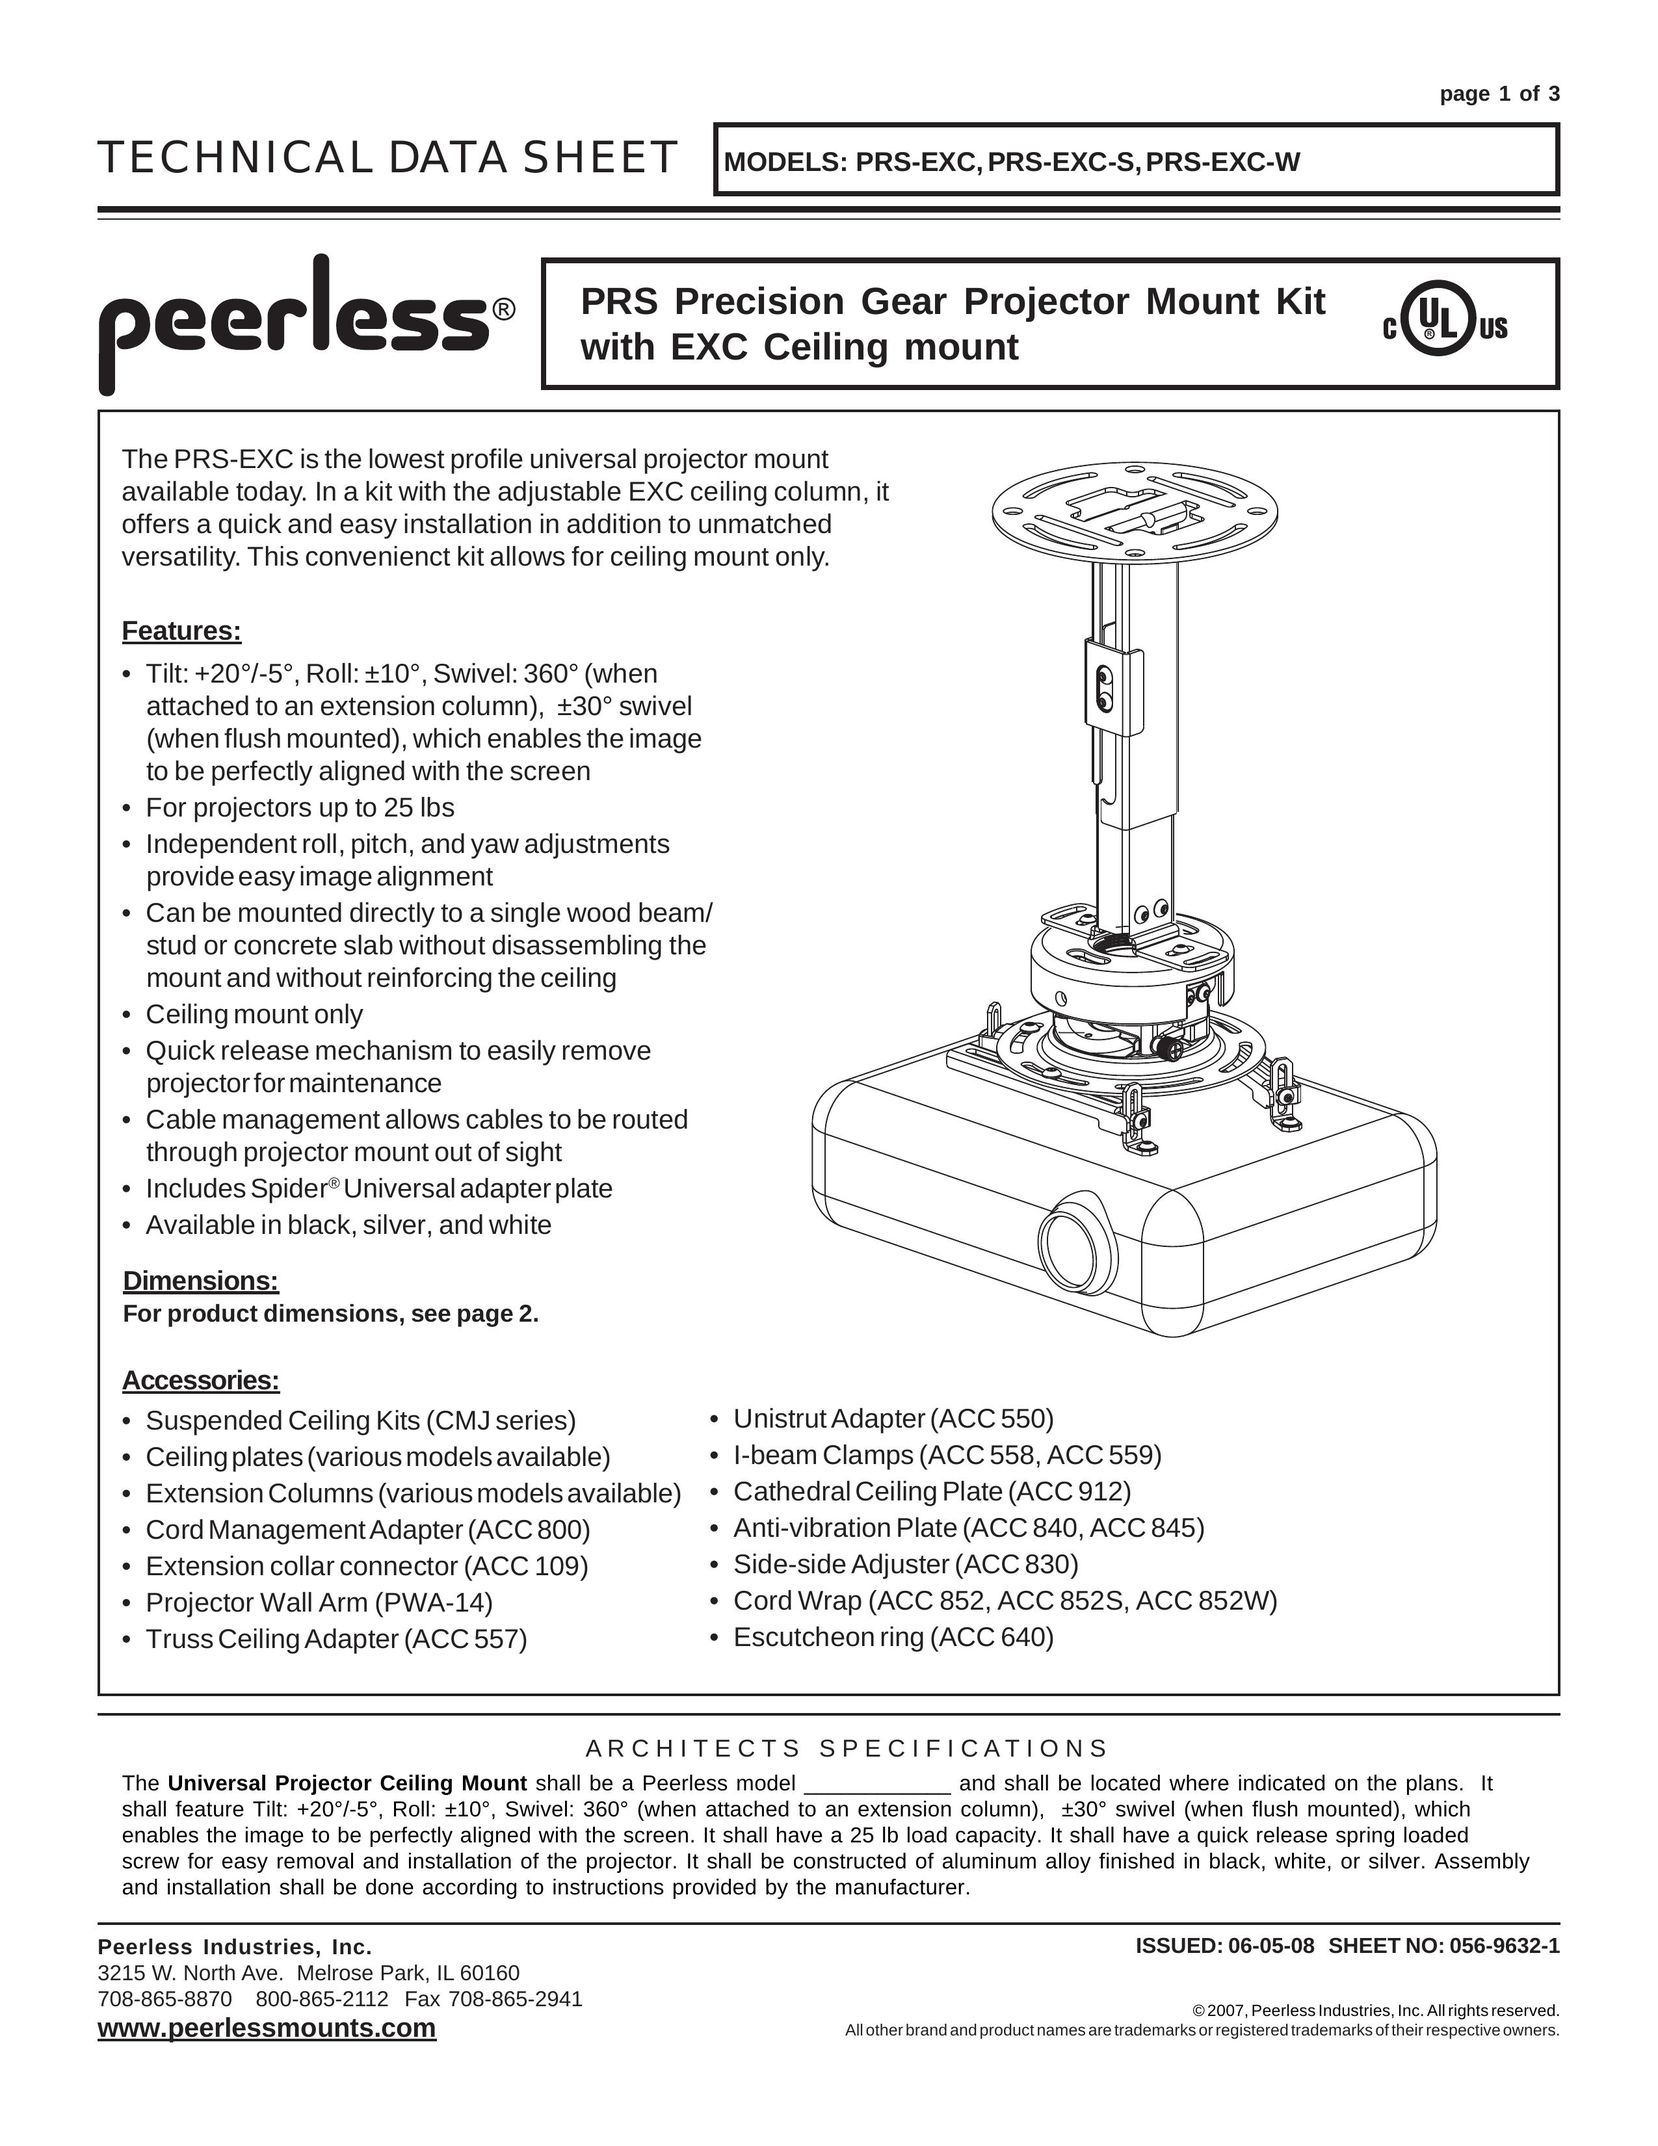 Peerless Industries PRS-EXC-S Projector Accessories User Manual